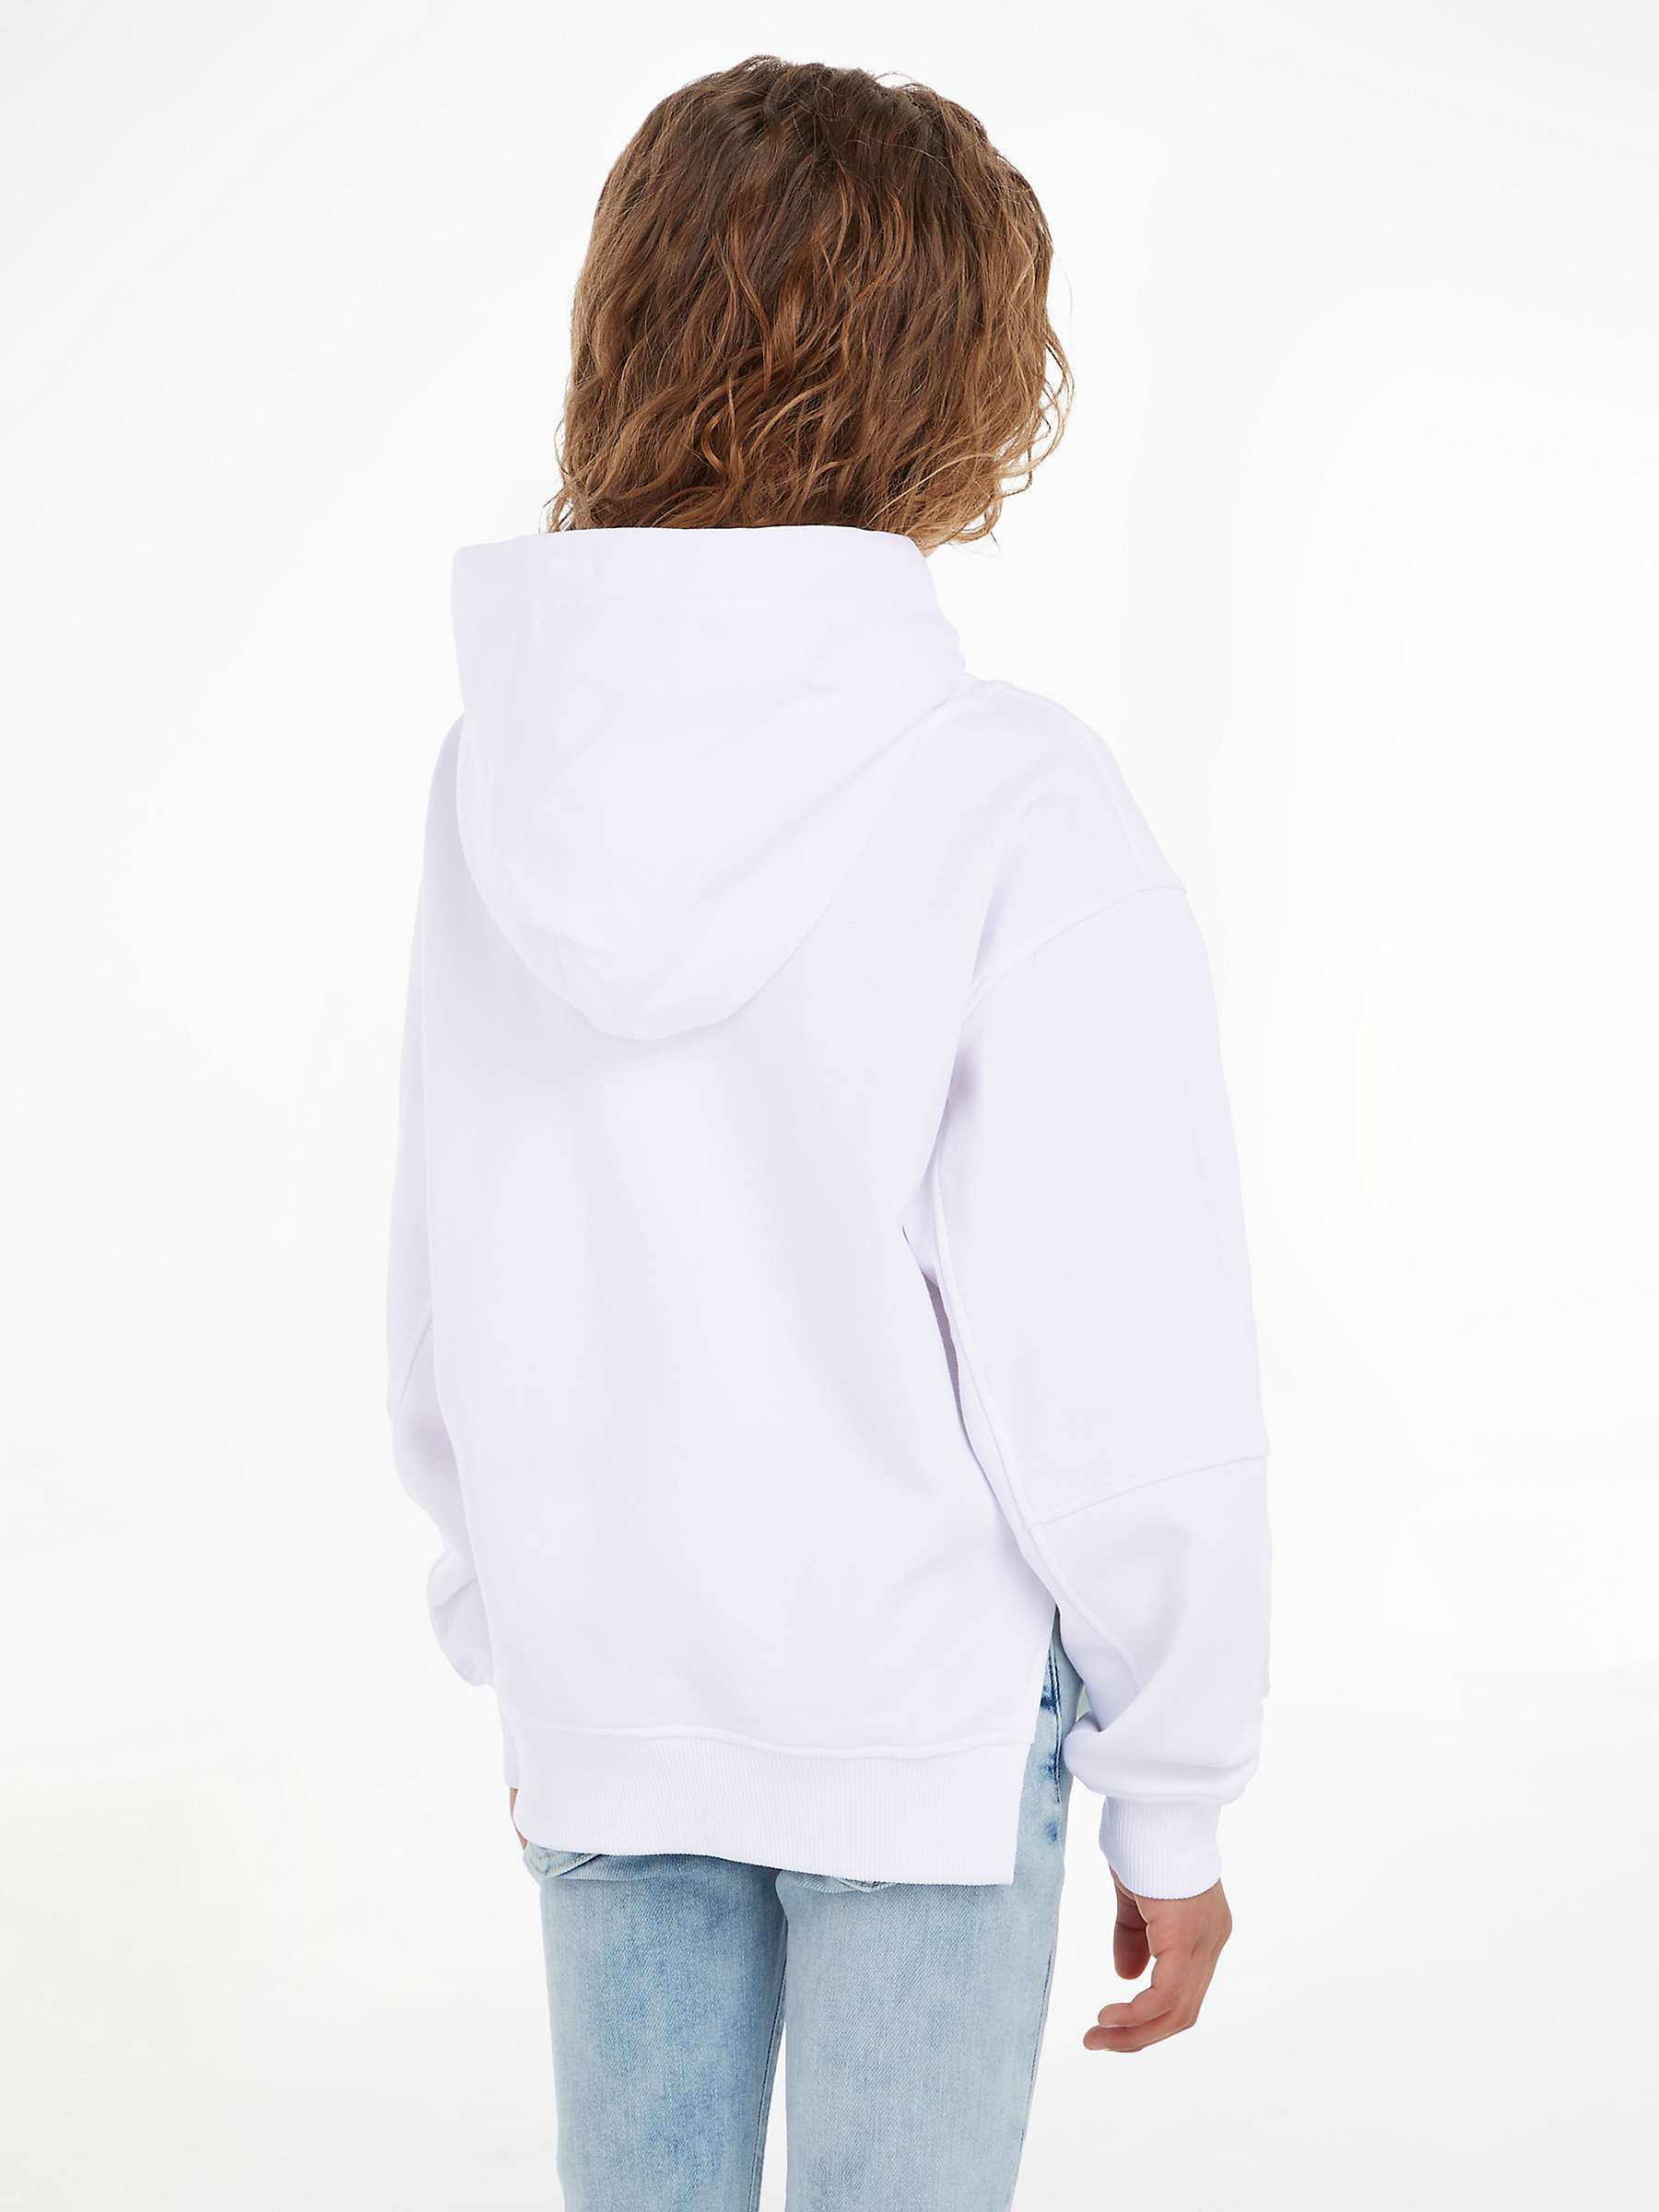 Buy Calvin Klein Kids' Metallic Satin Monogram Hoodie, Bright White Online at johnlewis.com